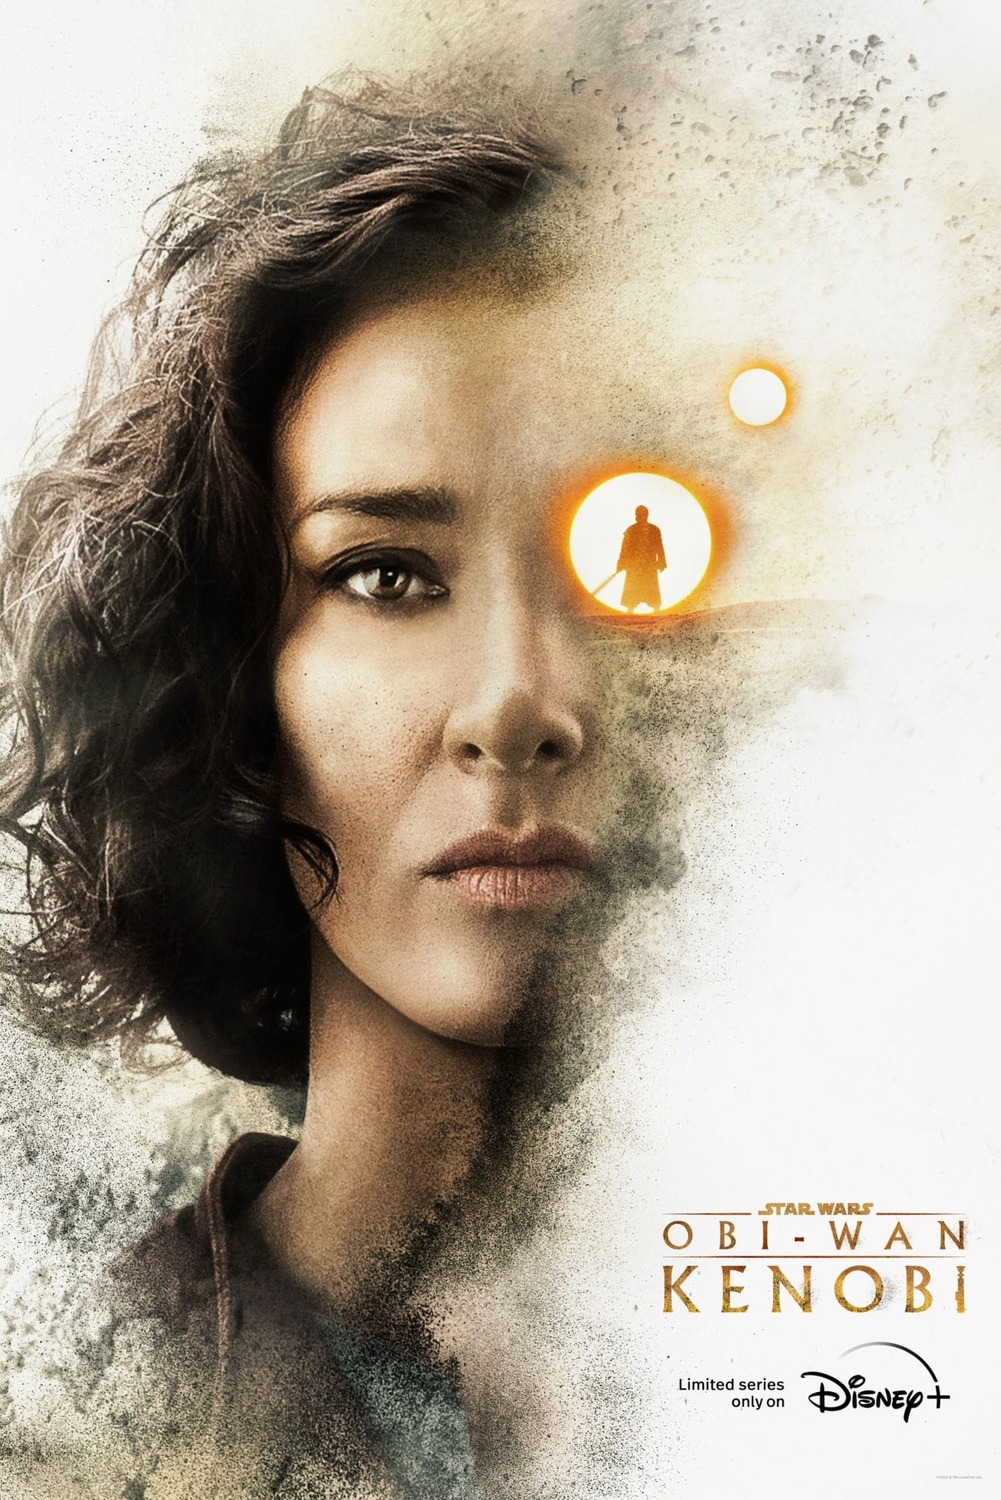 Extra Large Movie Poster Image for Obi-Wan Kenobi (#10 of 15)